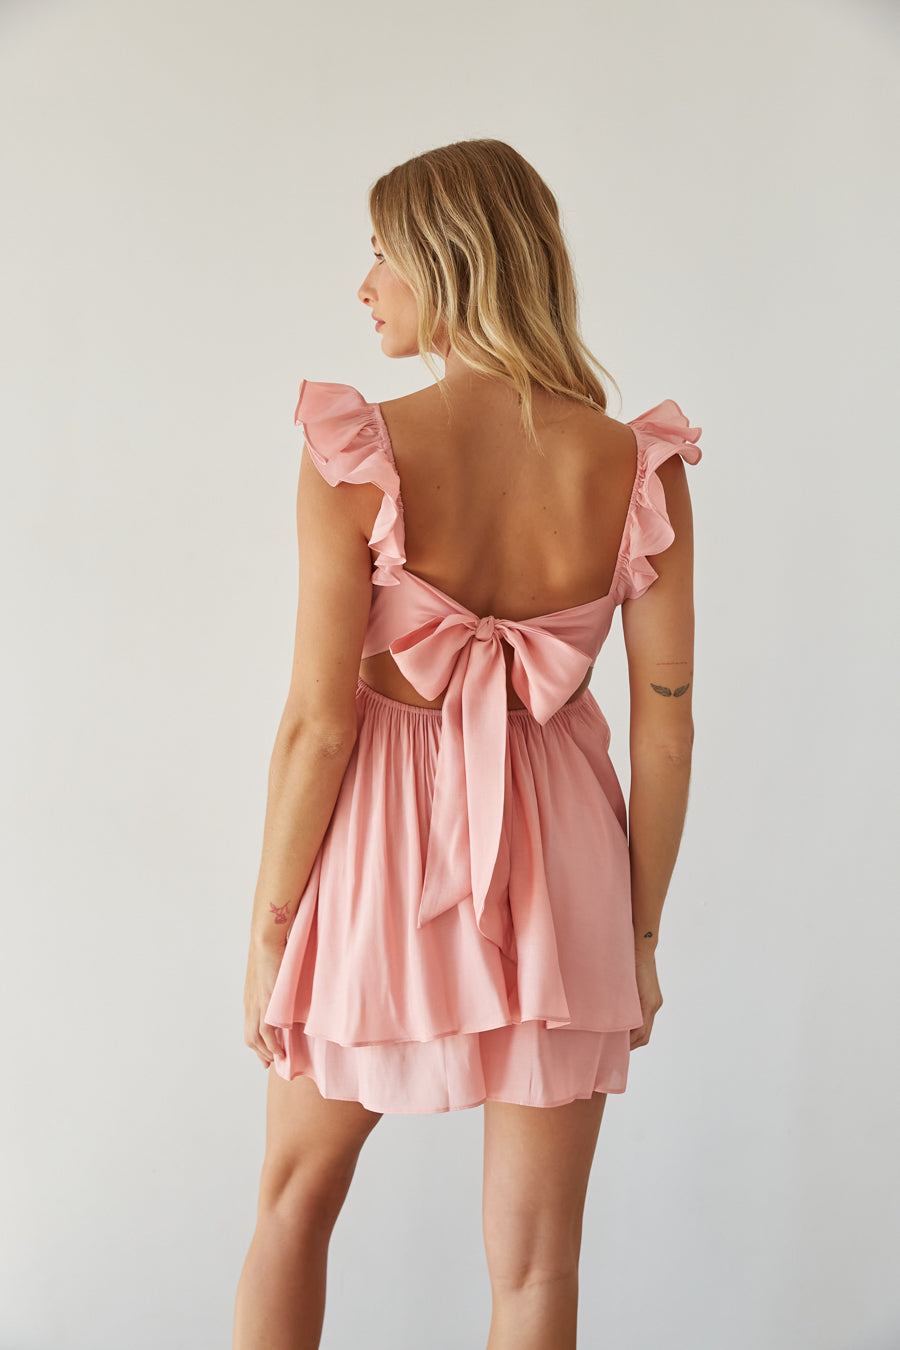 back view | pink ruffle strap babydoll dress | summer dress inspo